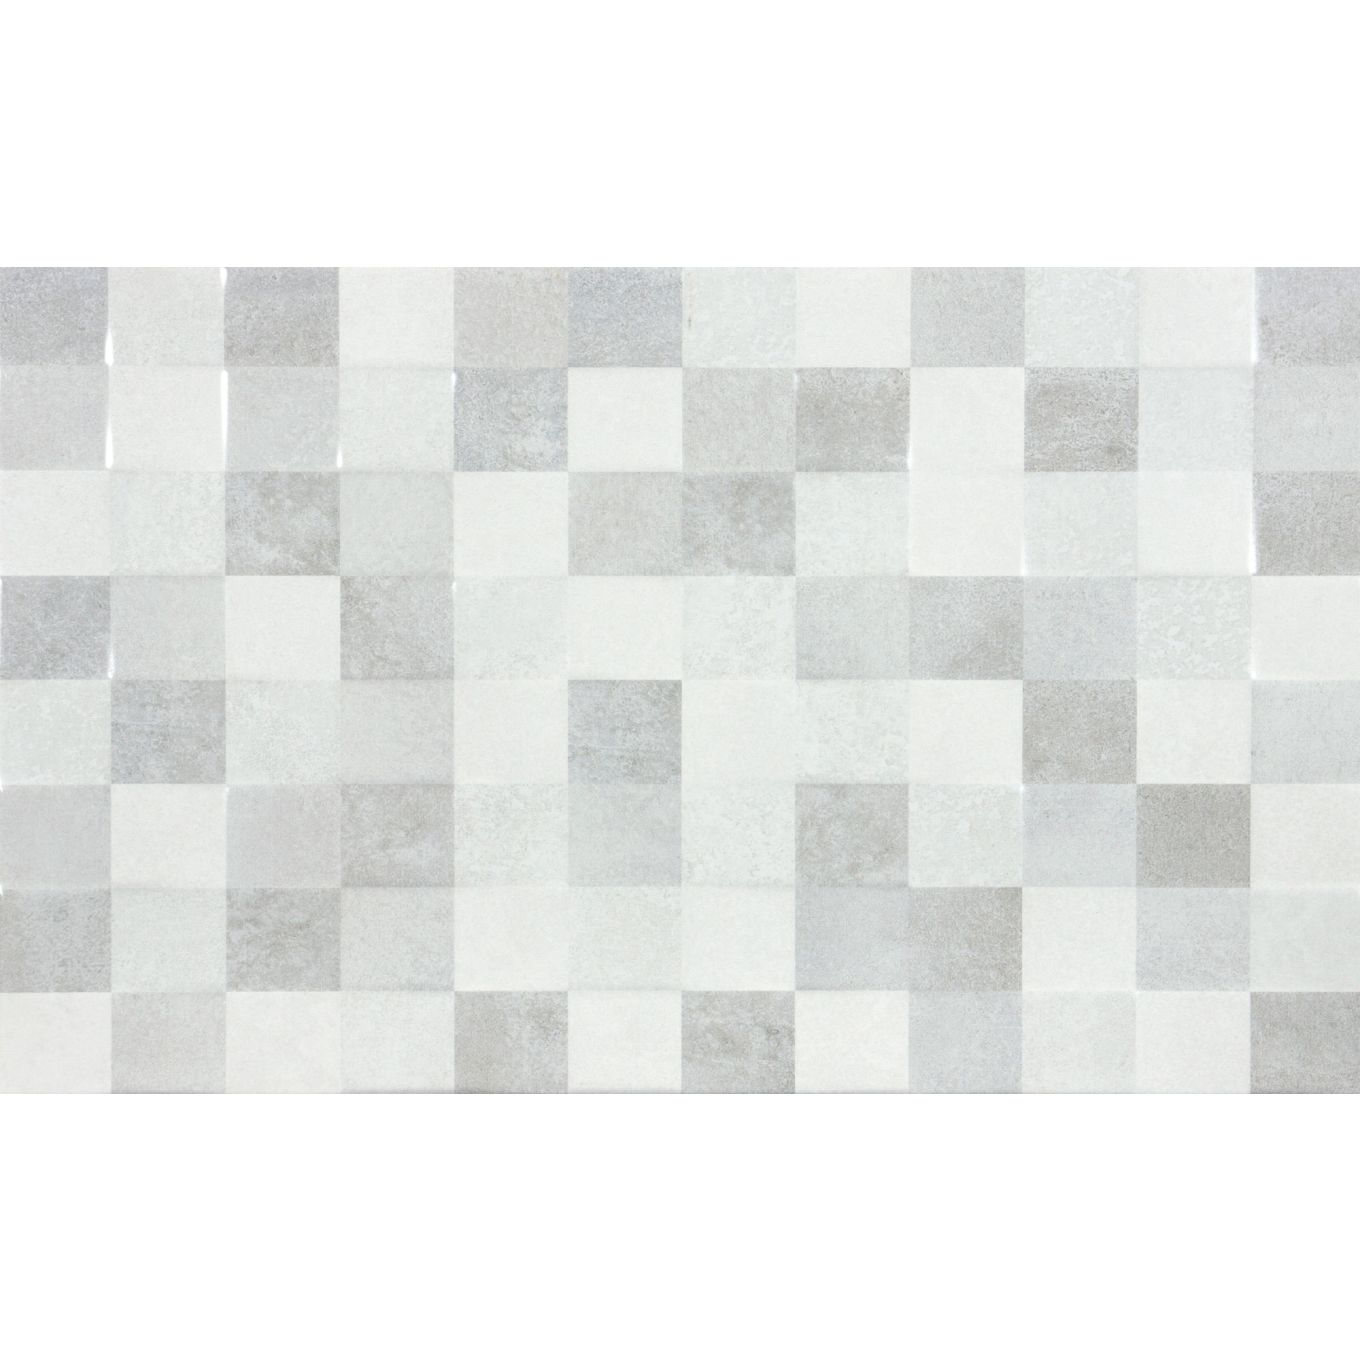 Studis Gris Mosaic Ceramic Tile - 330 x 550mm